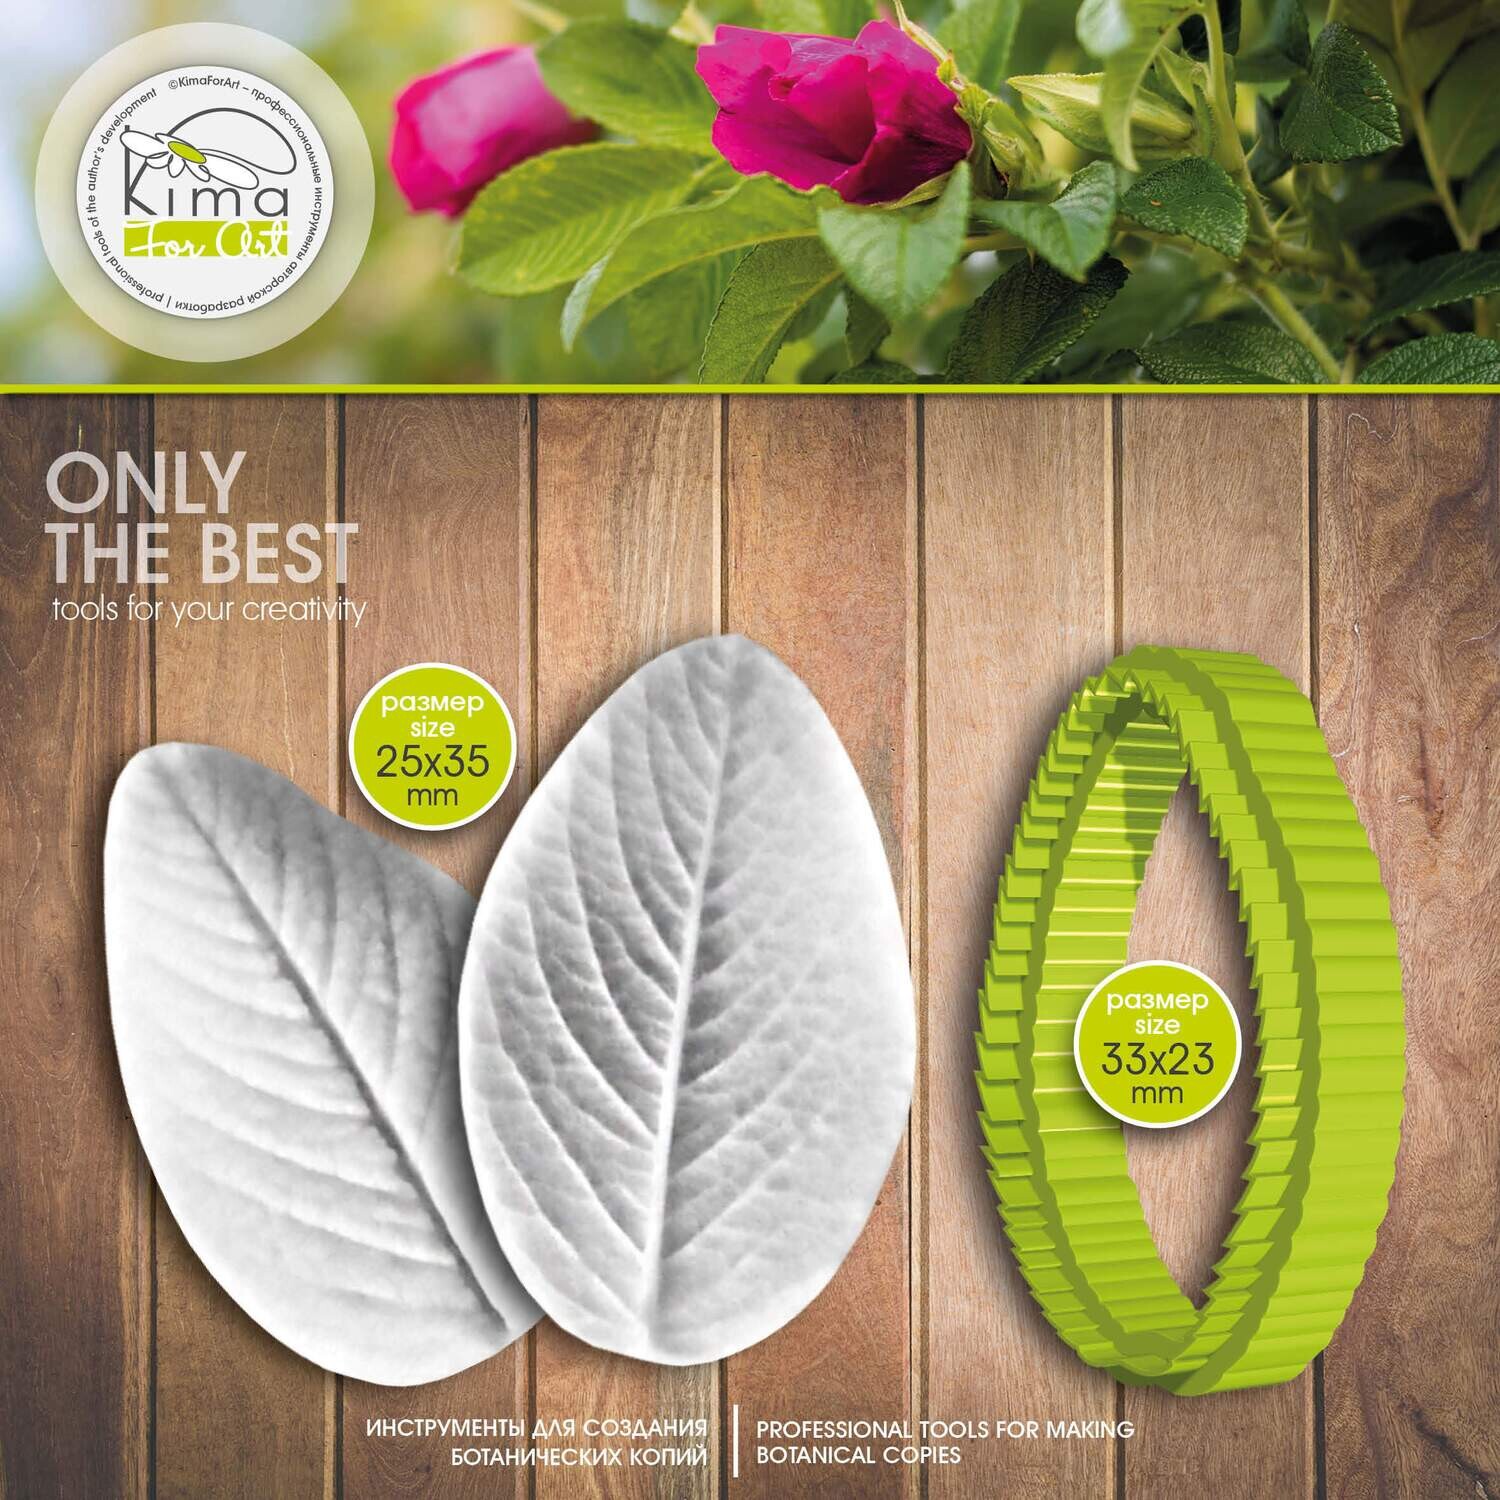 Rosehip leaf S